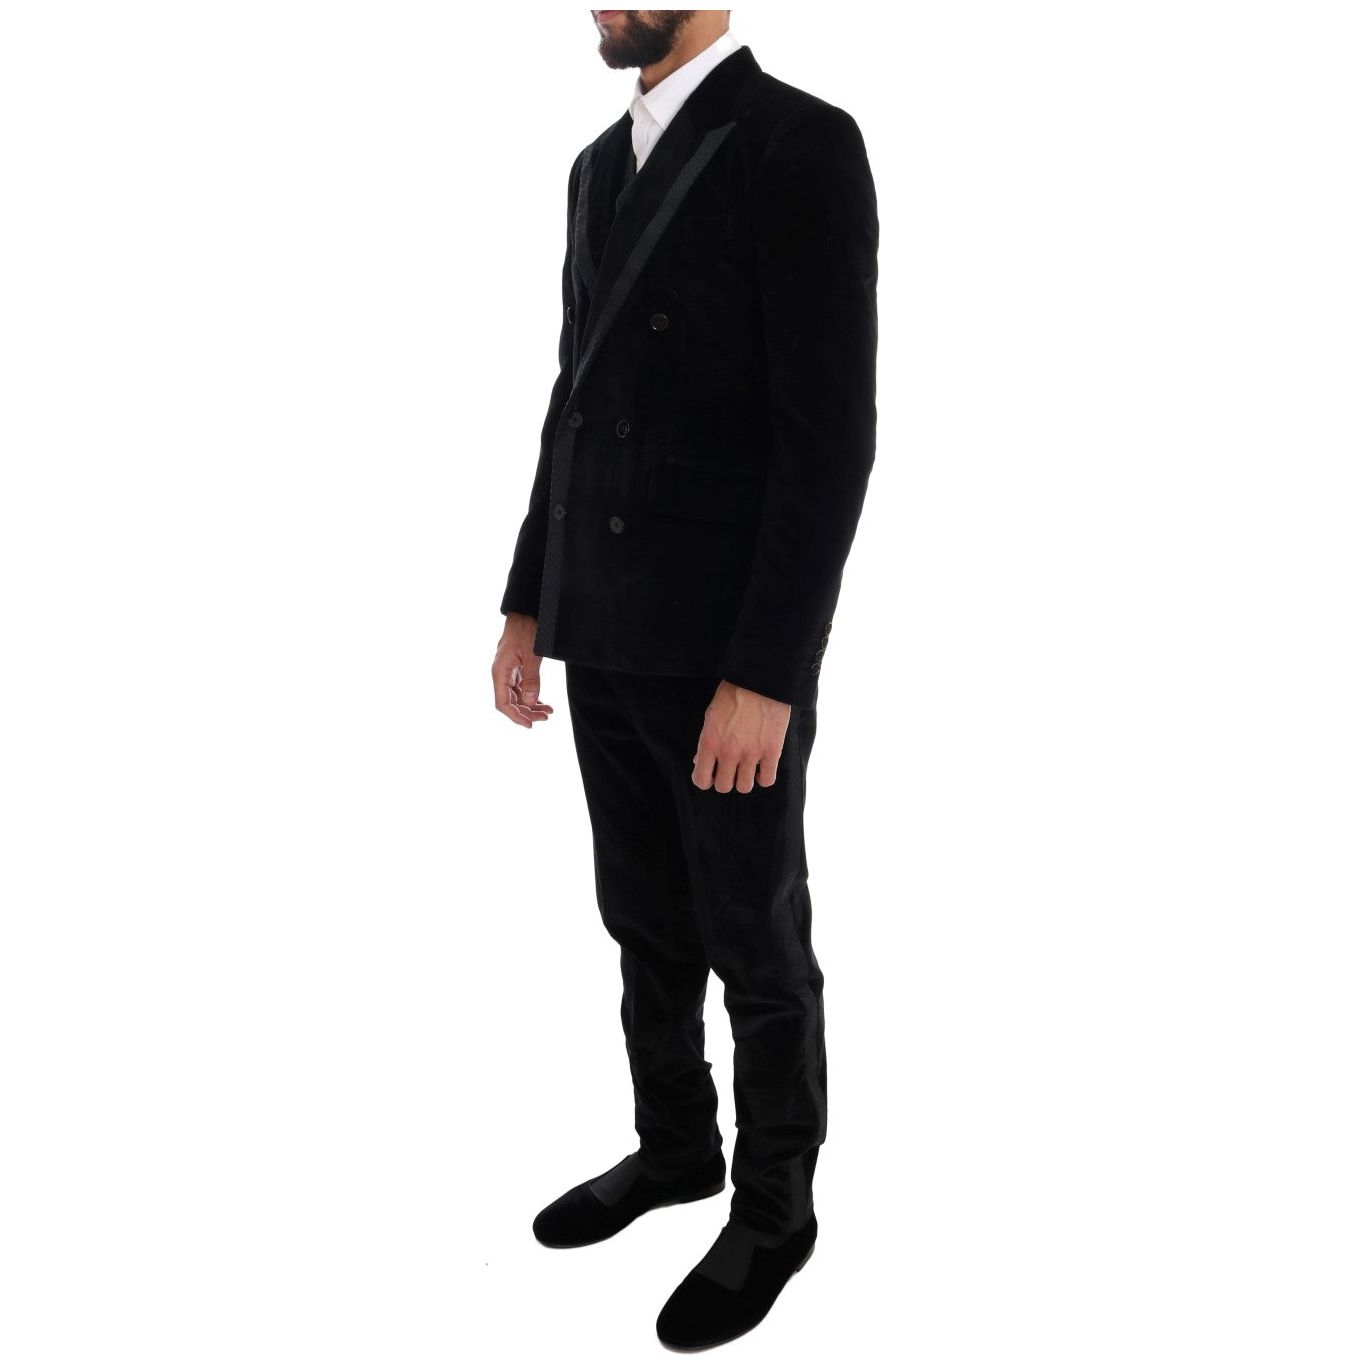 Dolce & Gabbana Elegant Black Slim Fit Three-Piece Suit Suit black-velvet-slim-double-breasted-suit